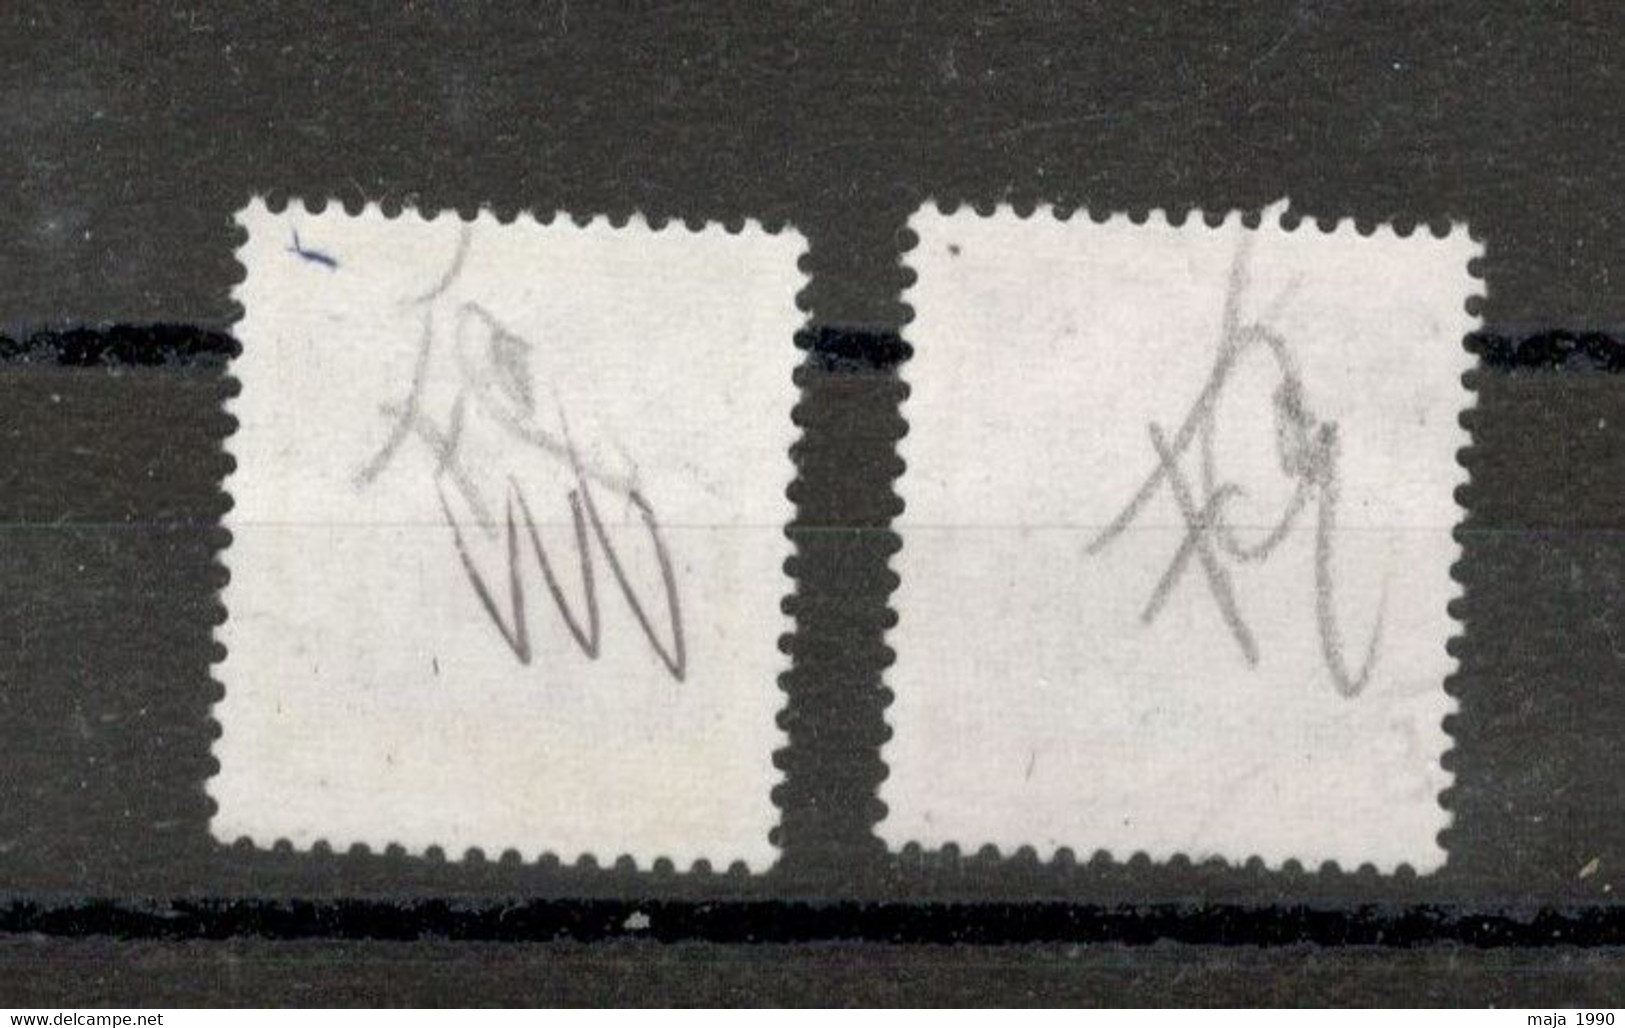 YUGOSLAVIA - SERBIA - USED DEFINITIVE SET - Mi.No. 312A / 313A - HIGH CV - 2004. - Used Stamps